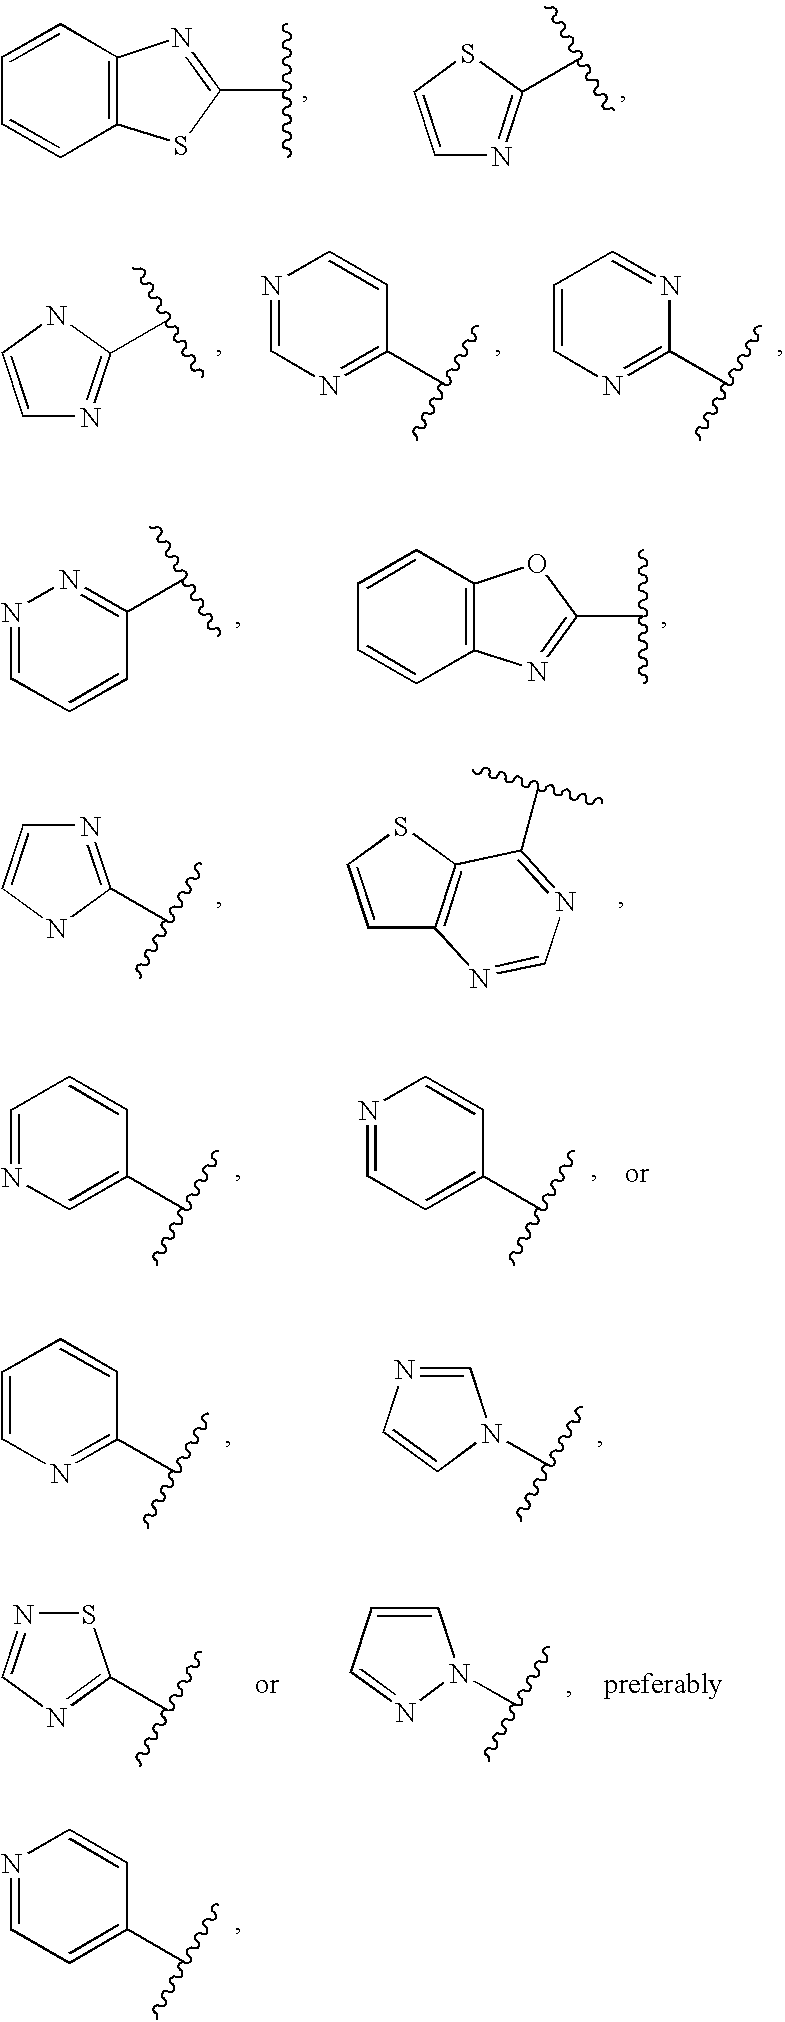 Cycloalkyl ketoamides derivatives useful as cathepsin k inhibitors